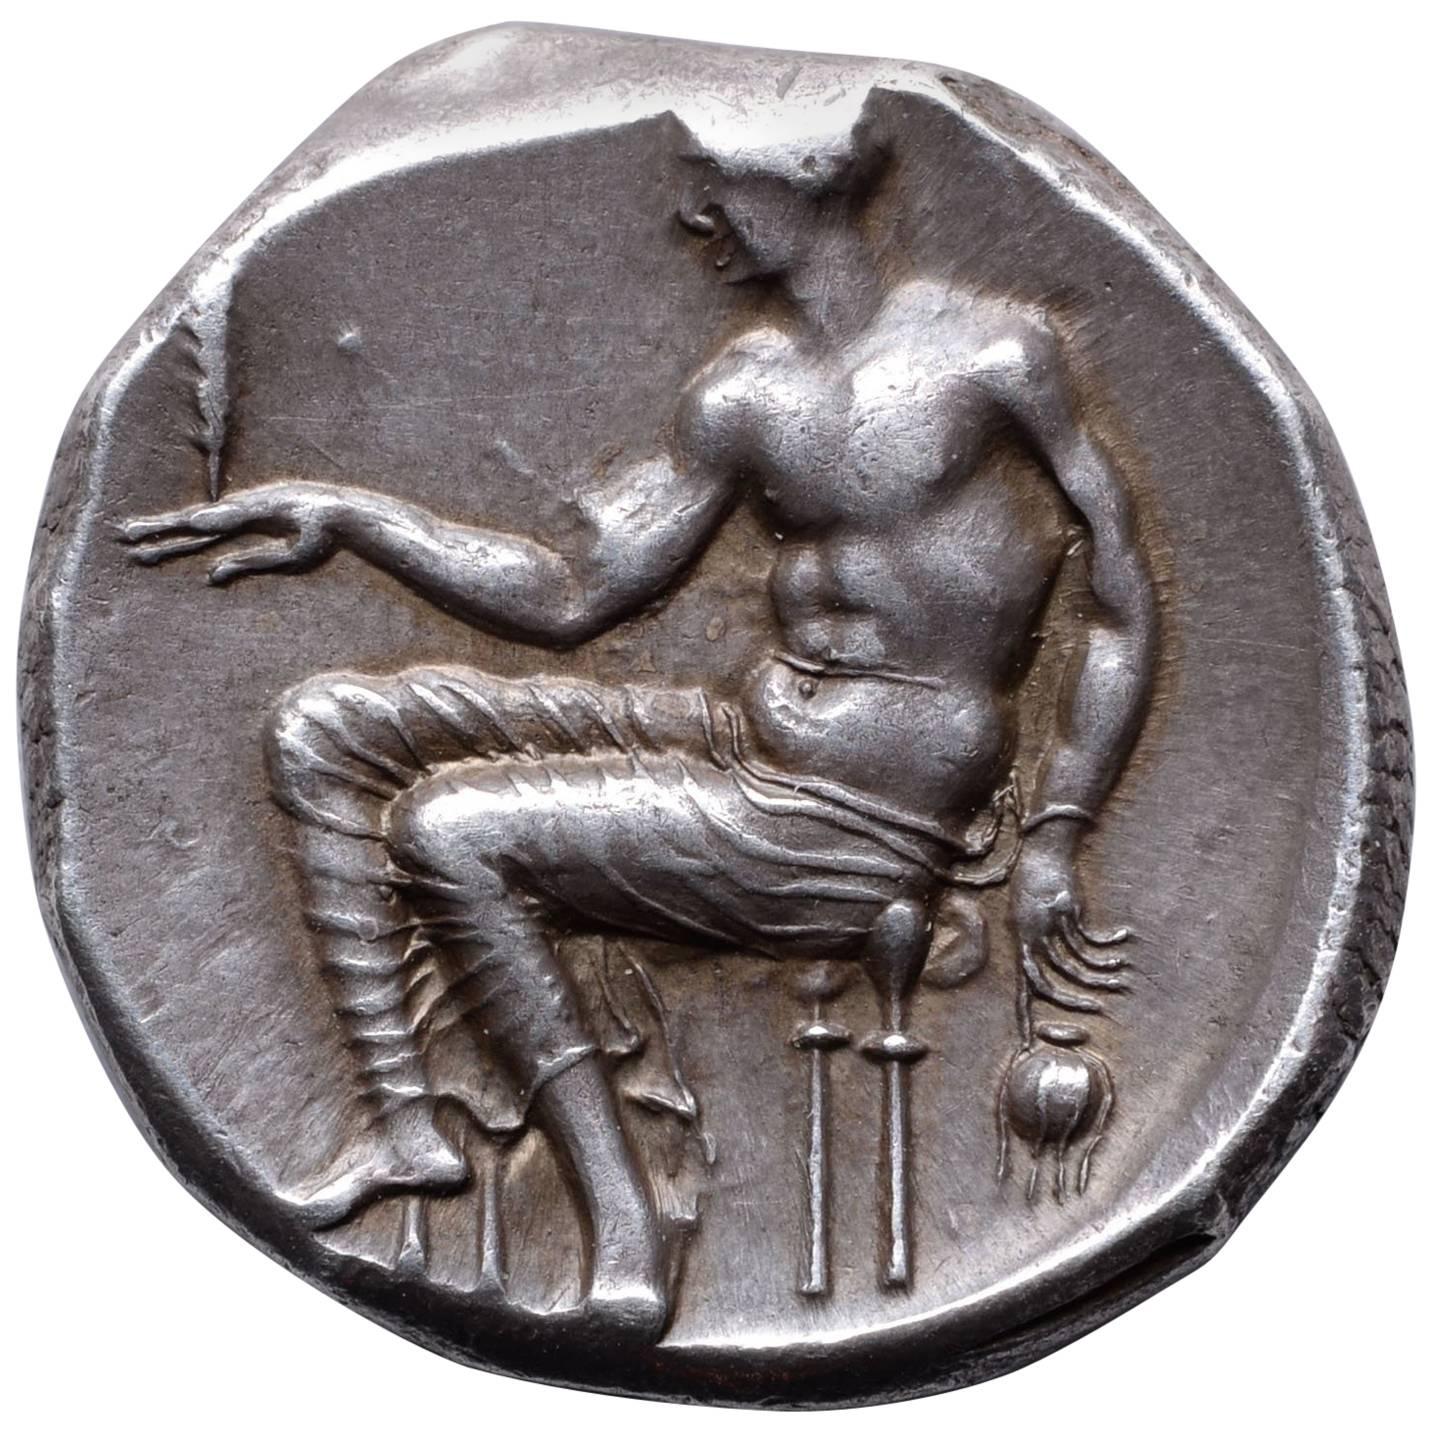 Superb Ancient Classical Greek Silver Didrachm Coin from Taras